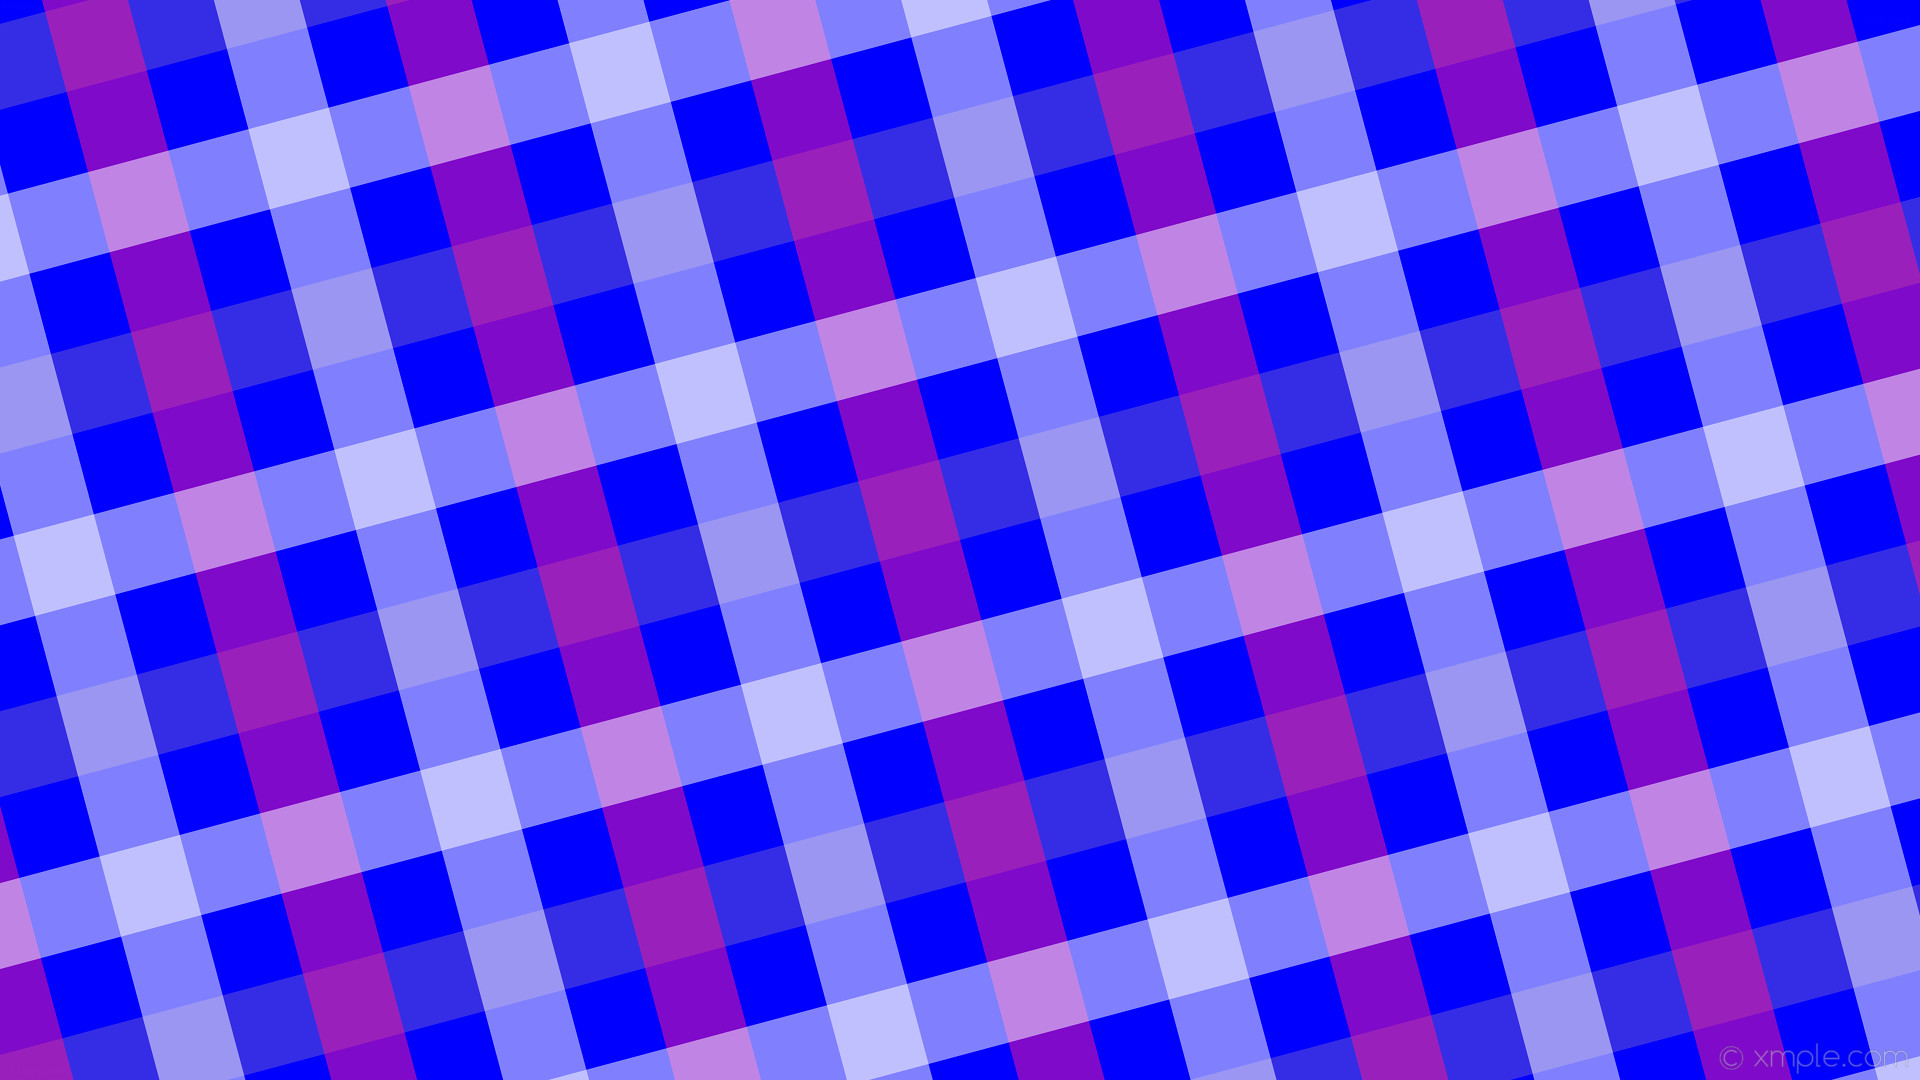 1920x1080 wallpaper blue purple quad white striped gingham pink slate blue deep pink  #0000ff #6a5acd